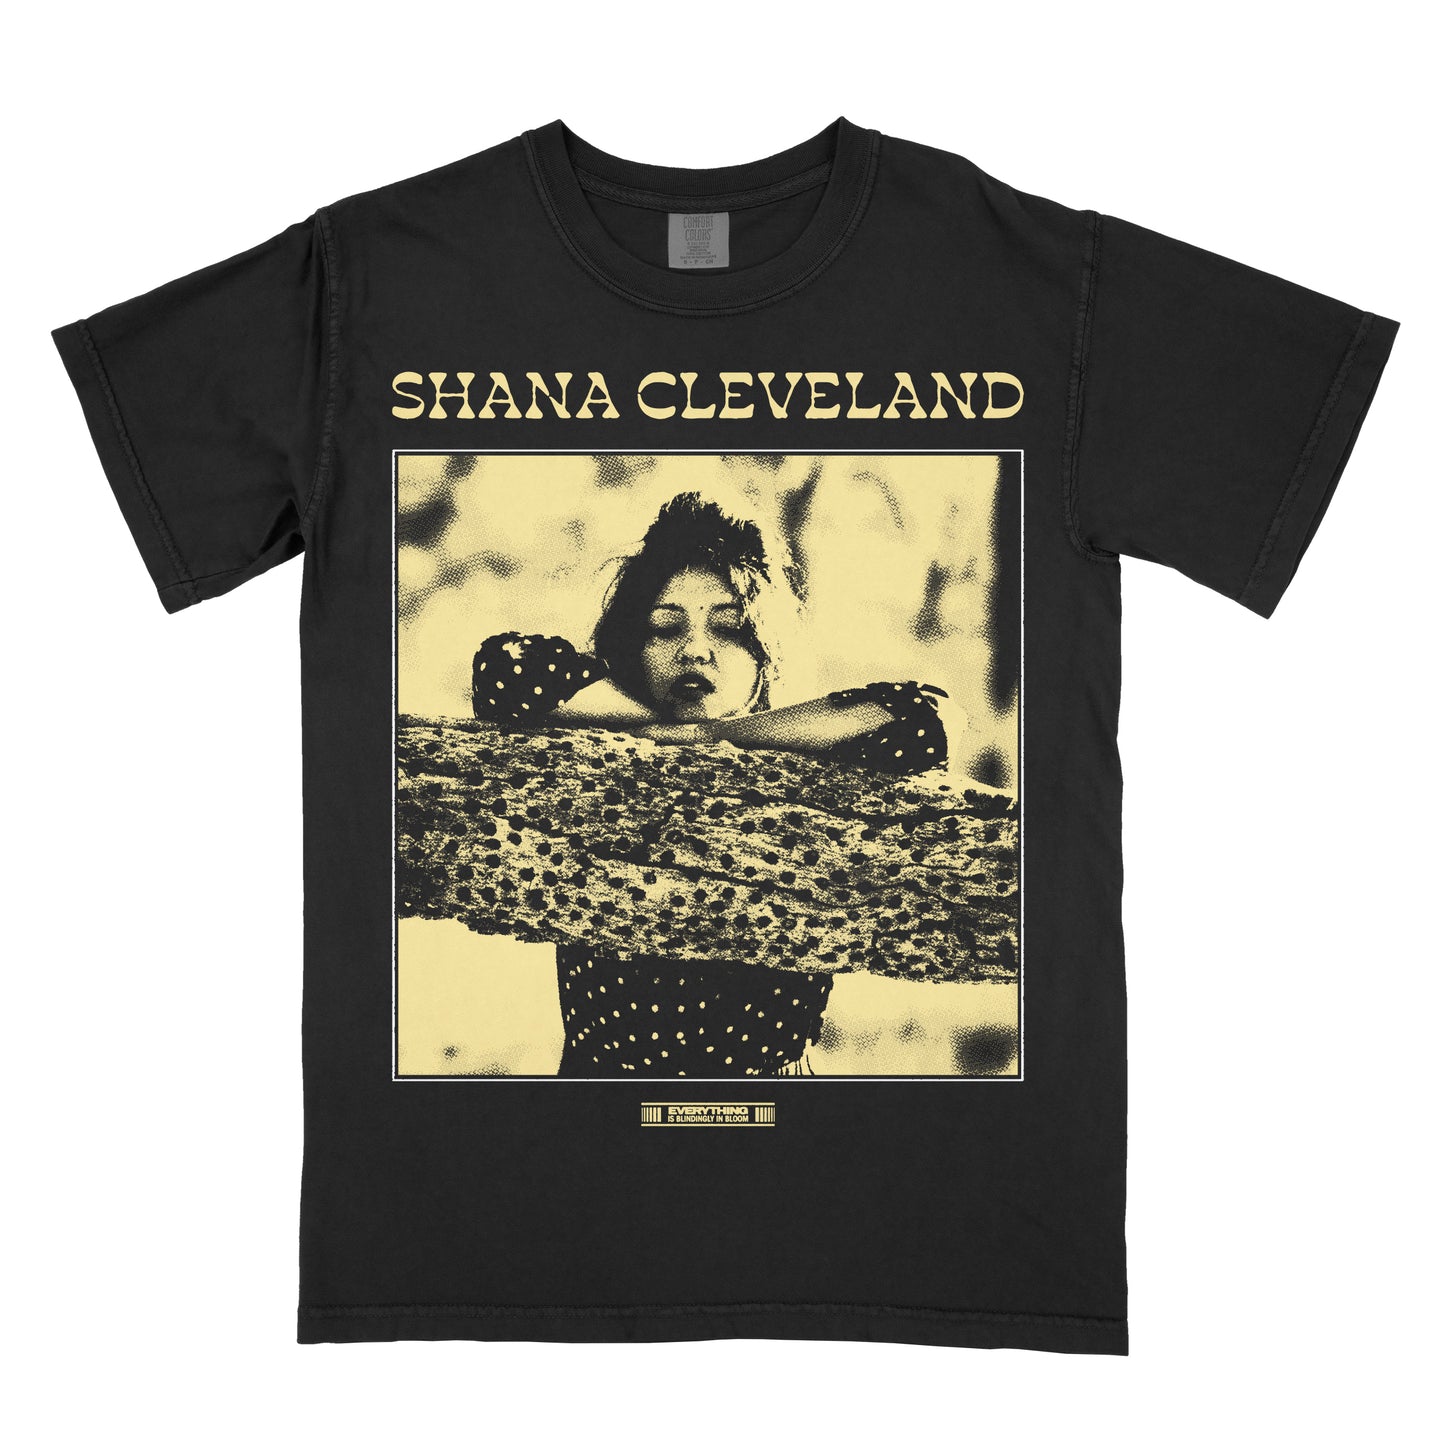 Shana Cleveland "Portrait" T-Shirt